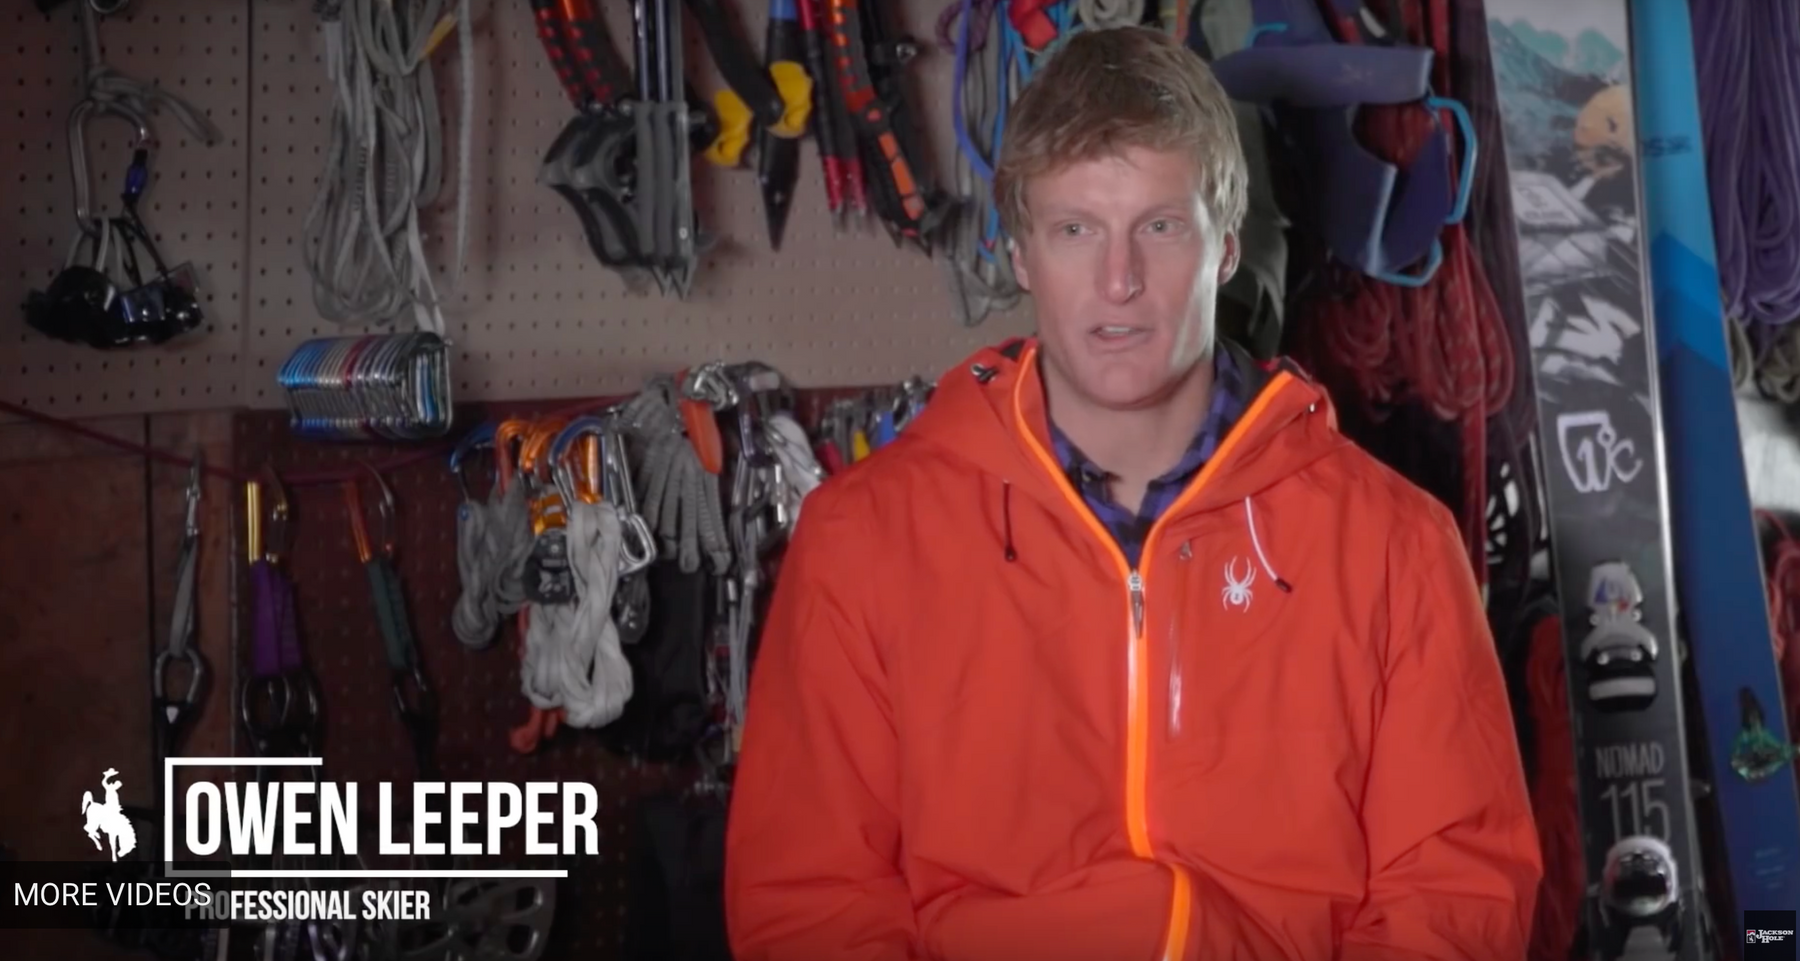 Owen Leeper - The Skier Who Lives Beyond Boundaries